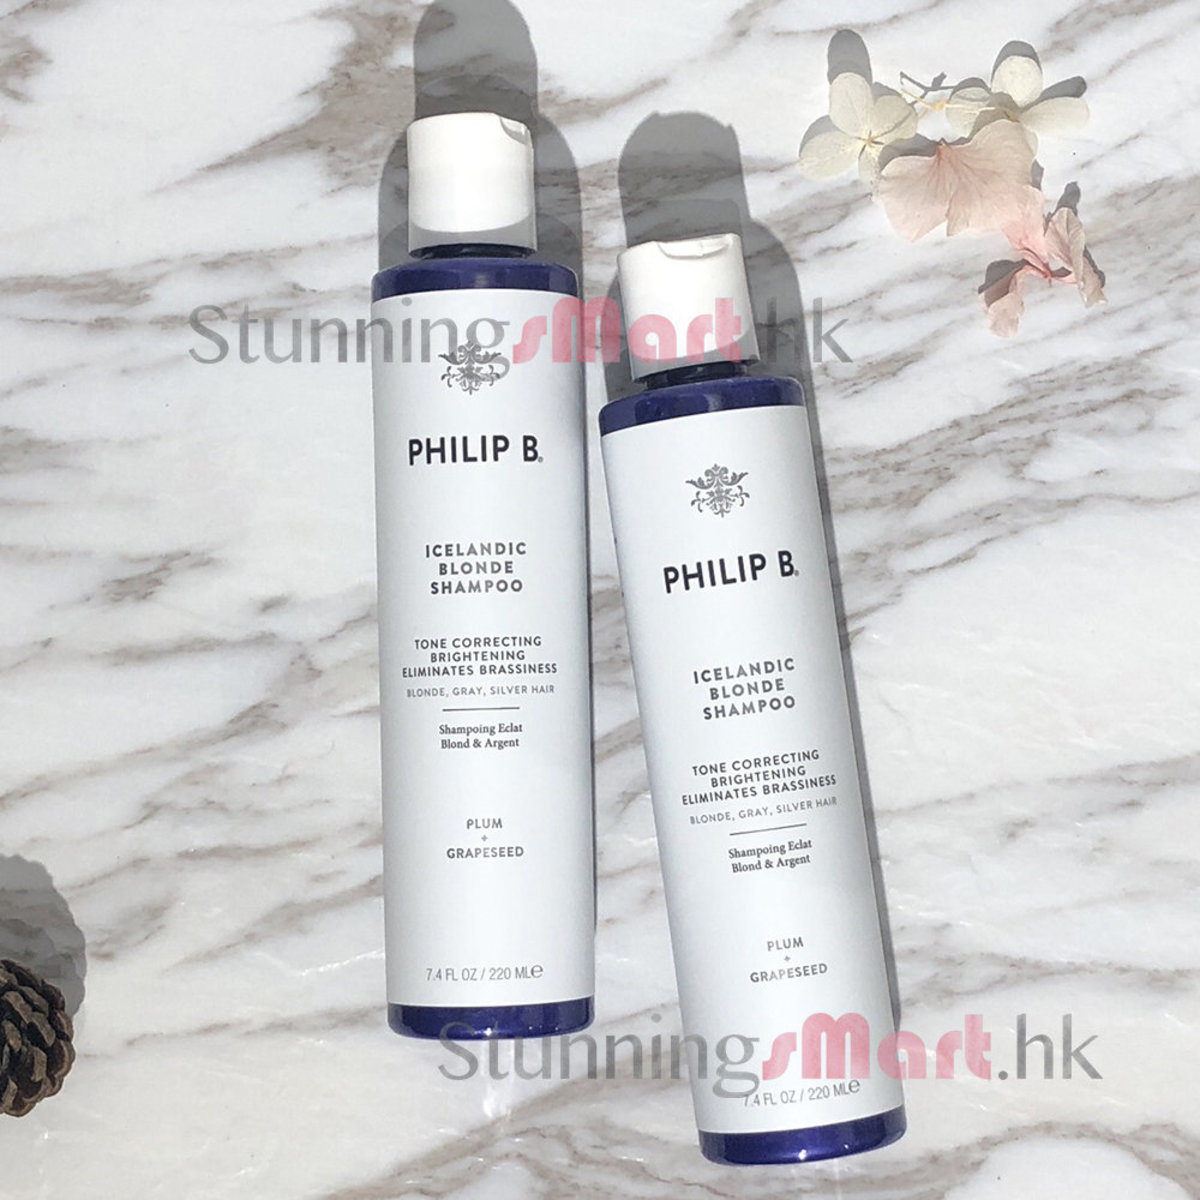 Philip | Icelandic Blonde Shampoo (For Blonde / / Silver Hair) 220.0g/ml | HKTVmall The Largest HK Shopping Platform